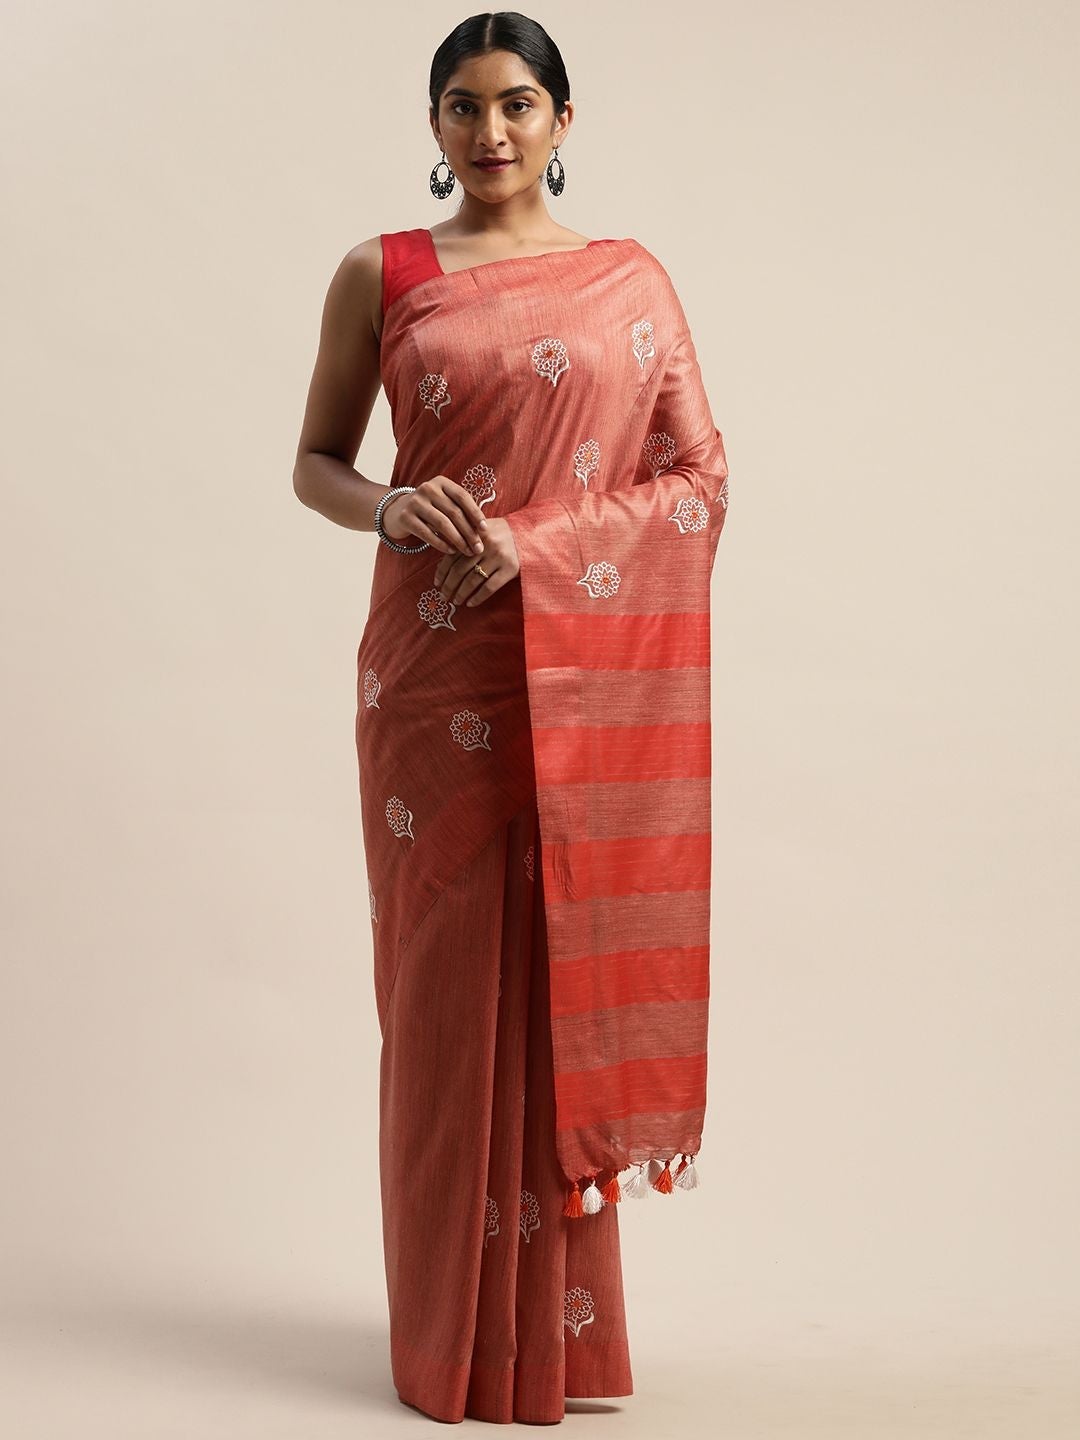 Women's Handloom Kota Saree With Flower Embriodery - Olive Mist